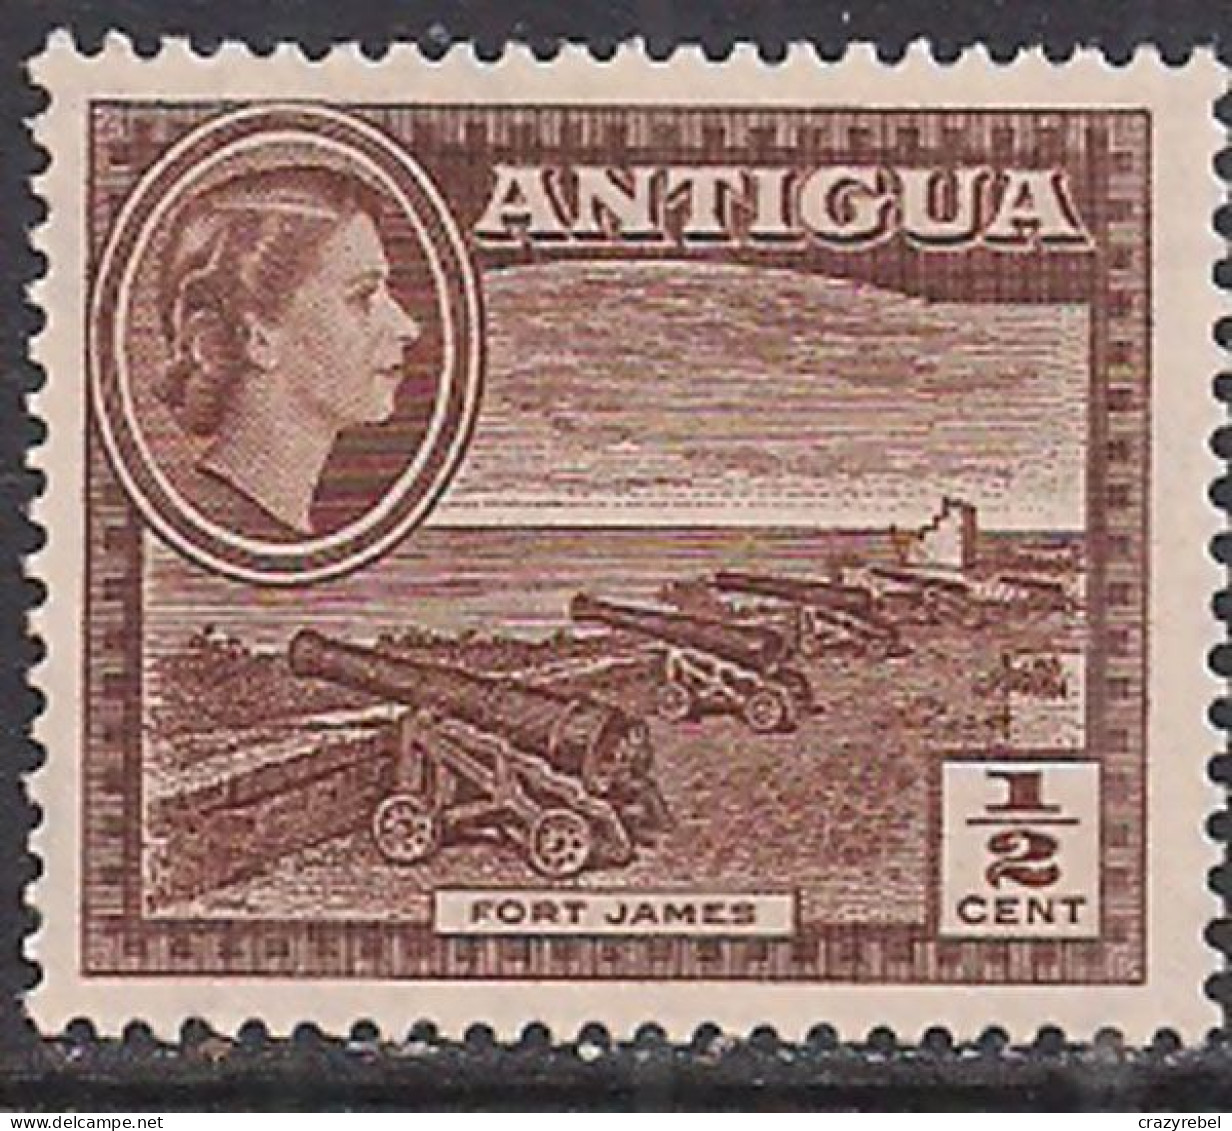 Antigua 1953 - 62 QE2 1/2cent Brown SG 120a MNH ( B1005 ) - 1858-1960 Crown Colony